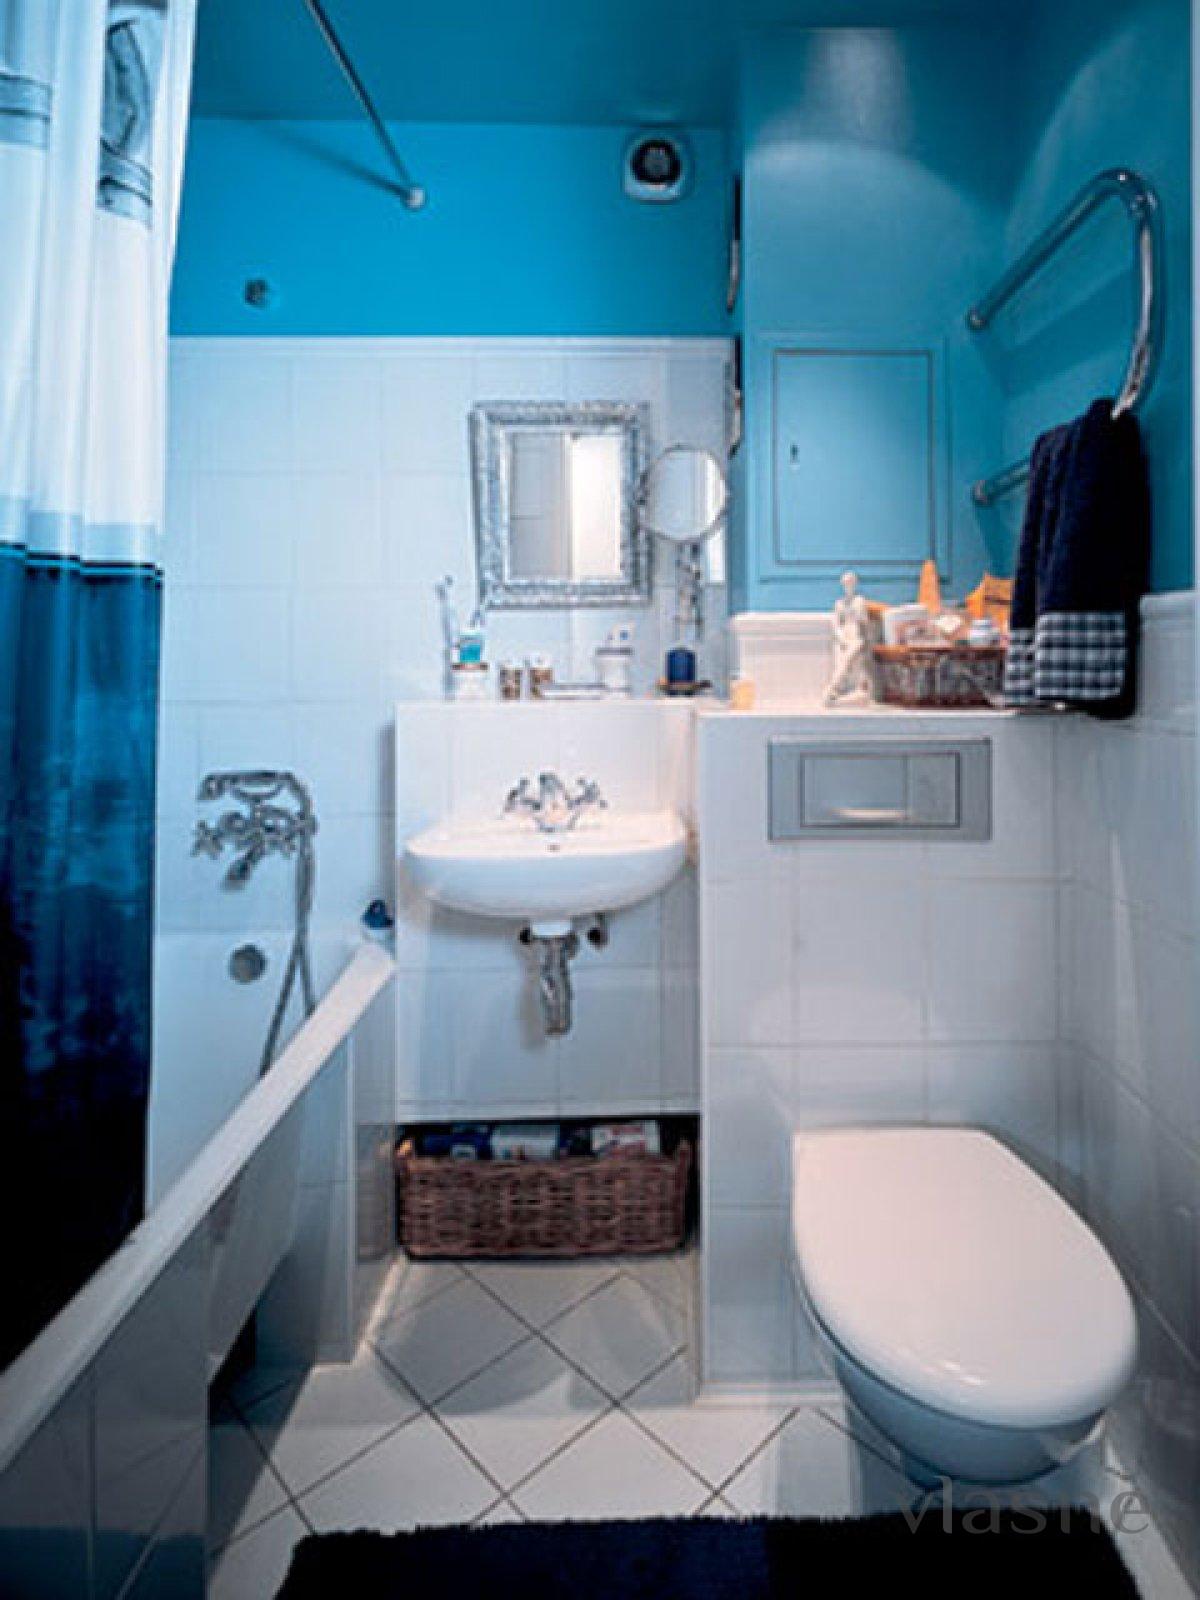 Ванная комната 4кв дизайн синий